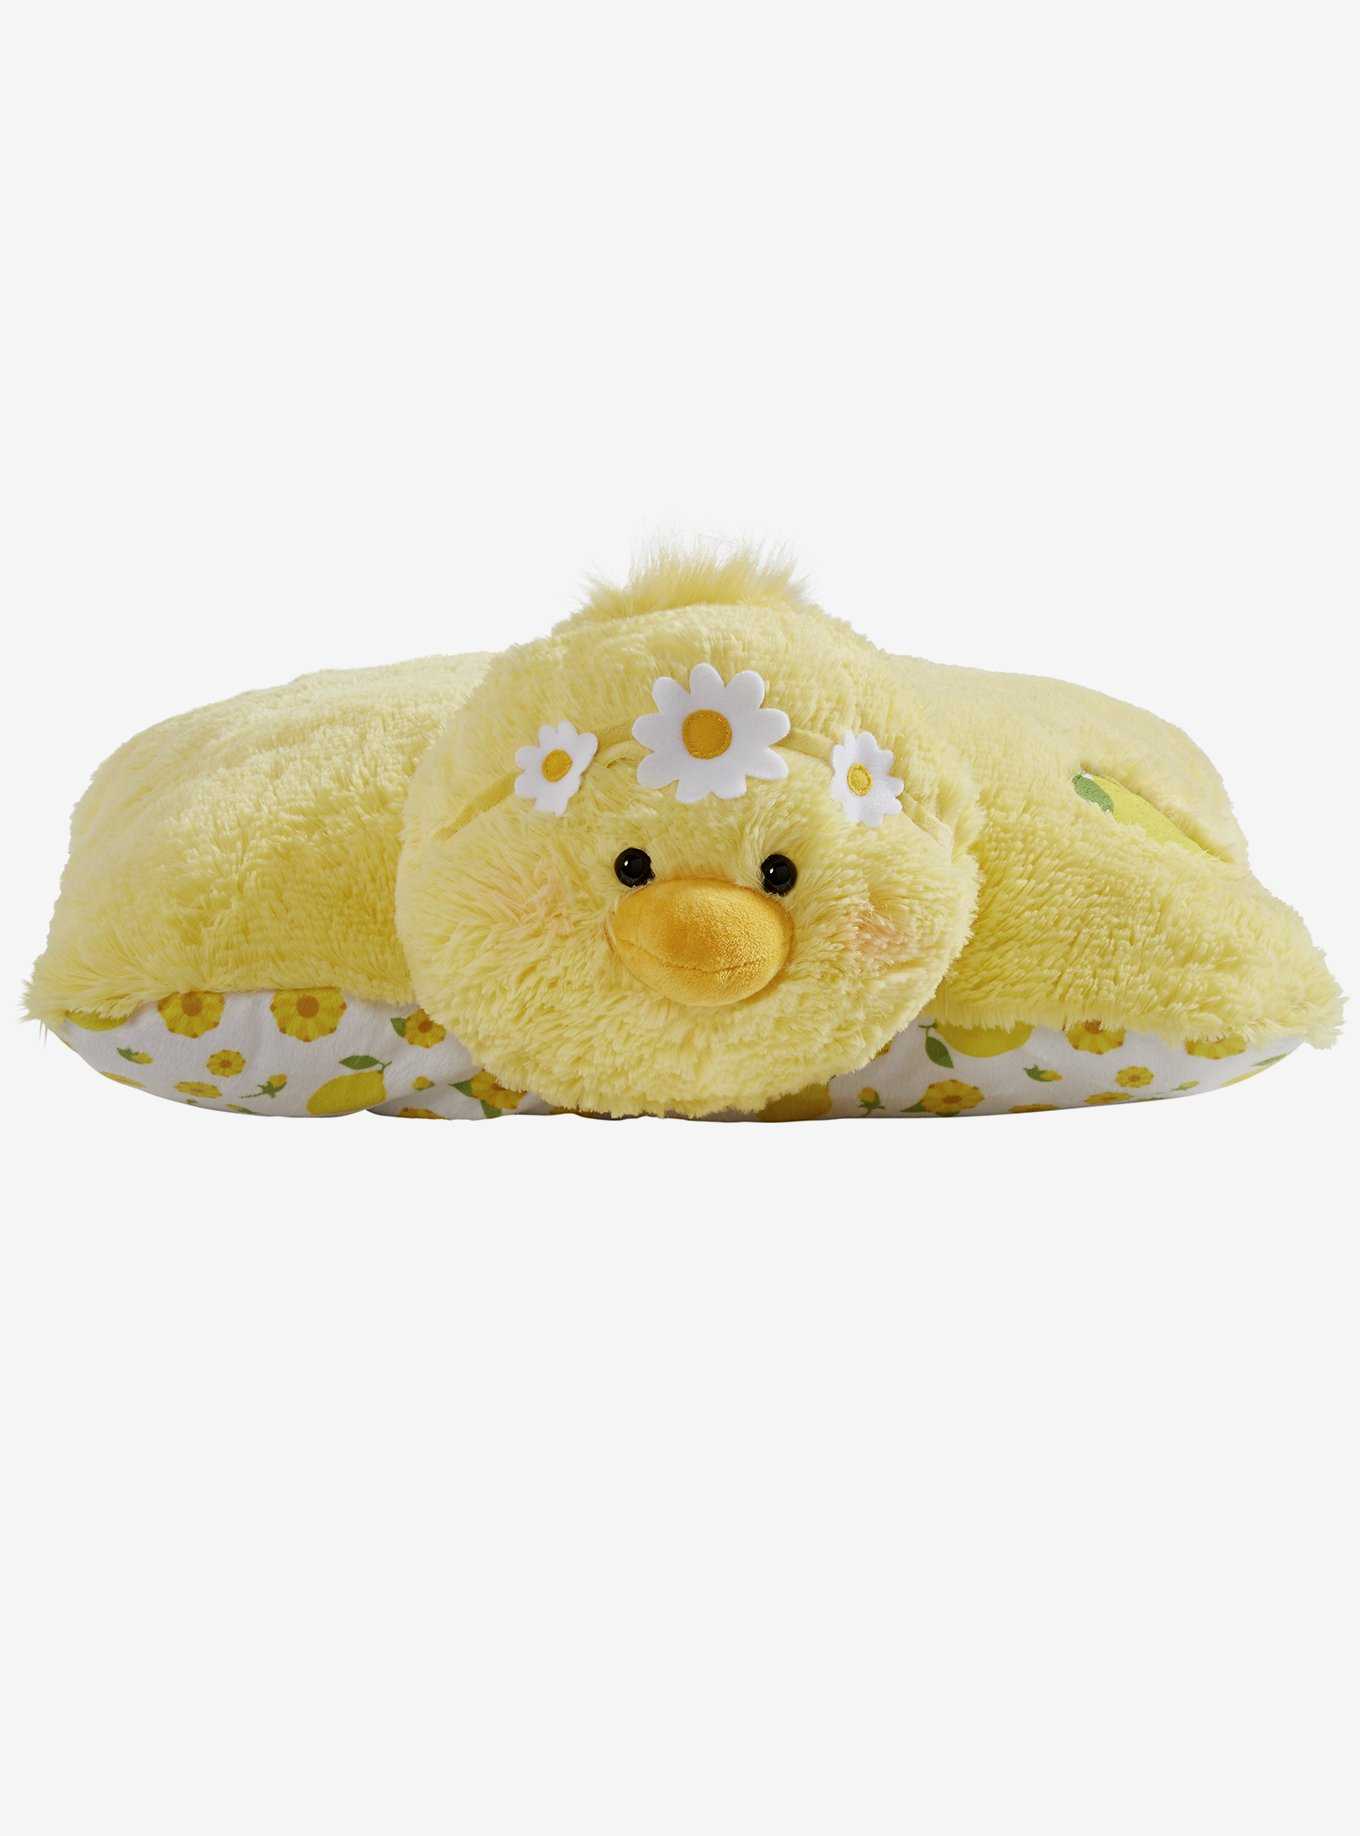 Sweet Scented Lemon Chick Pillow Pets Plush Toy, , hi-res